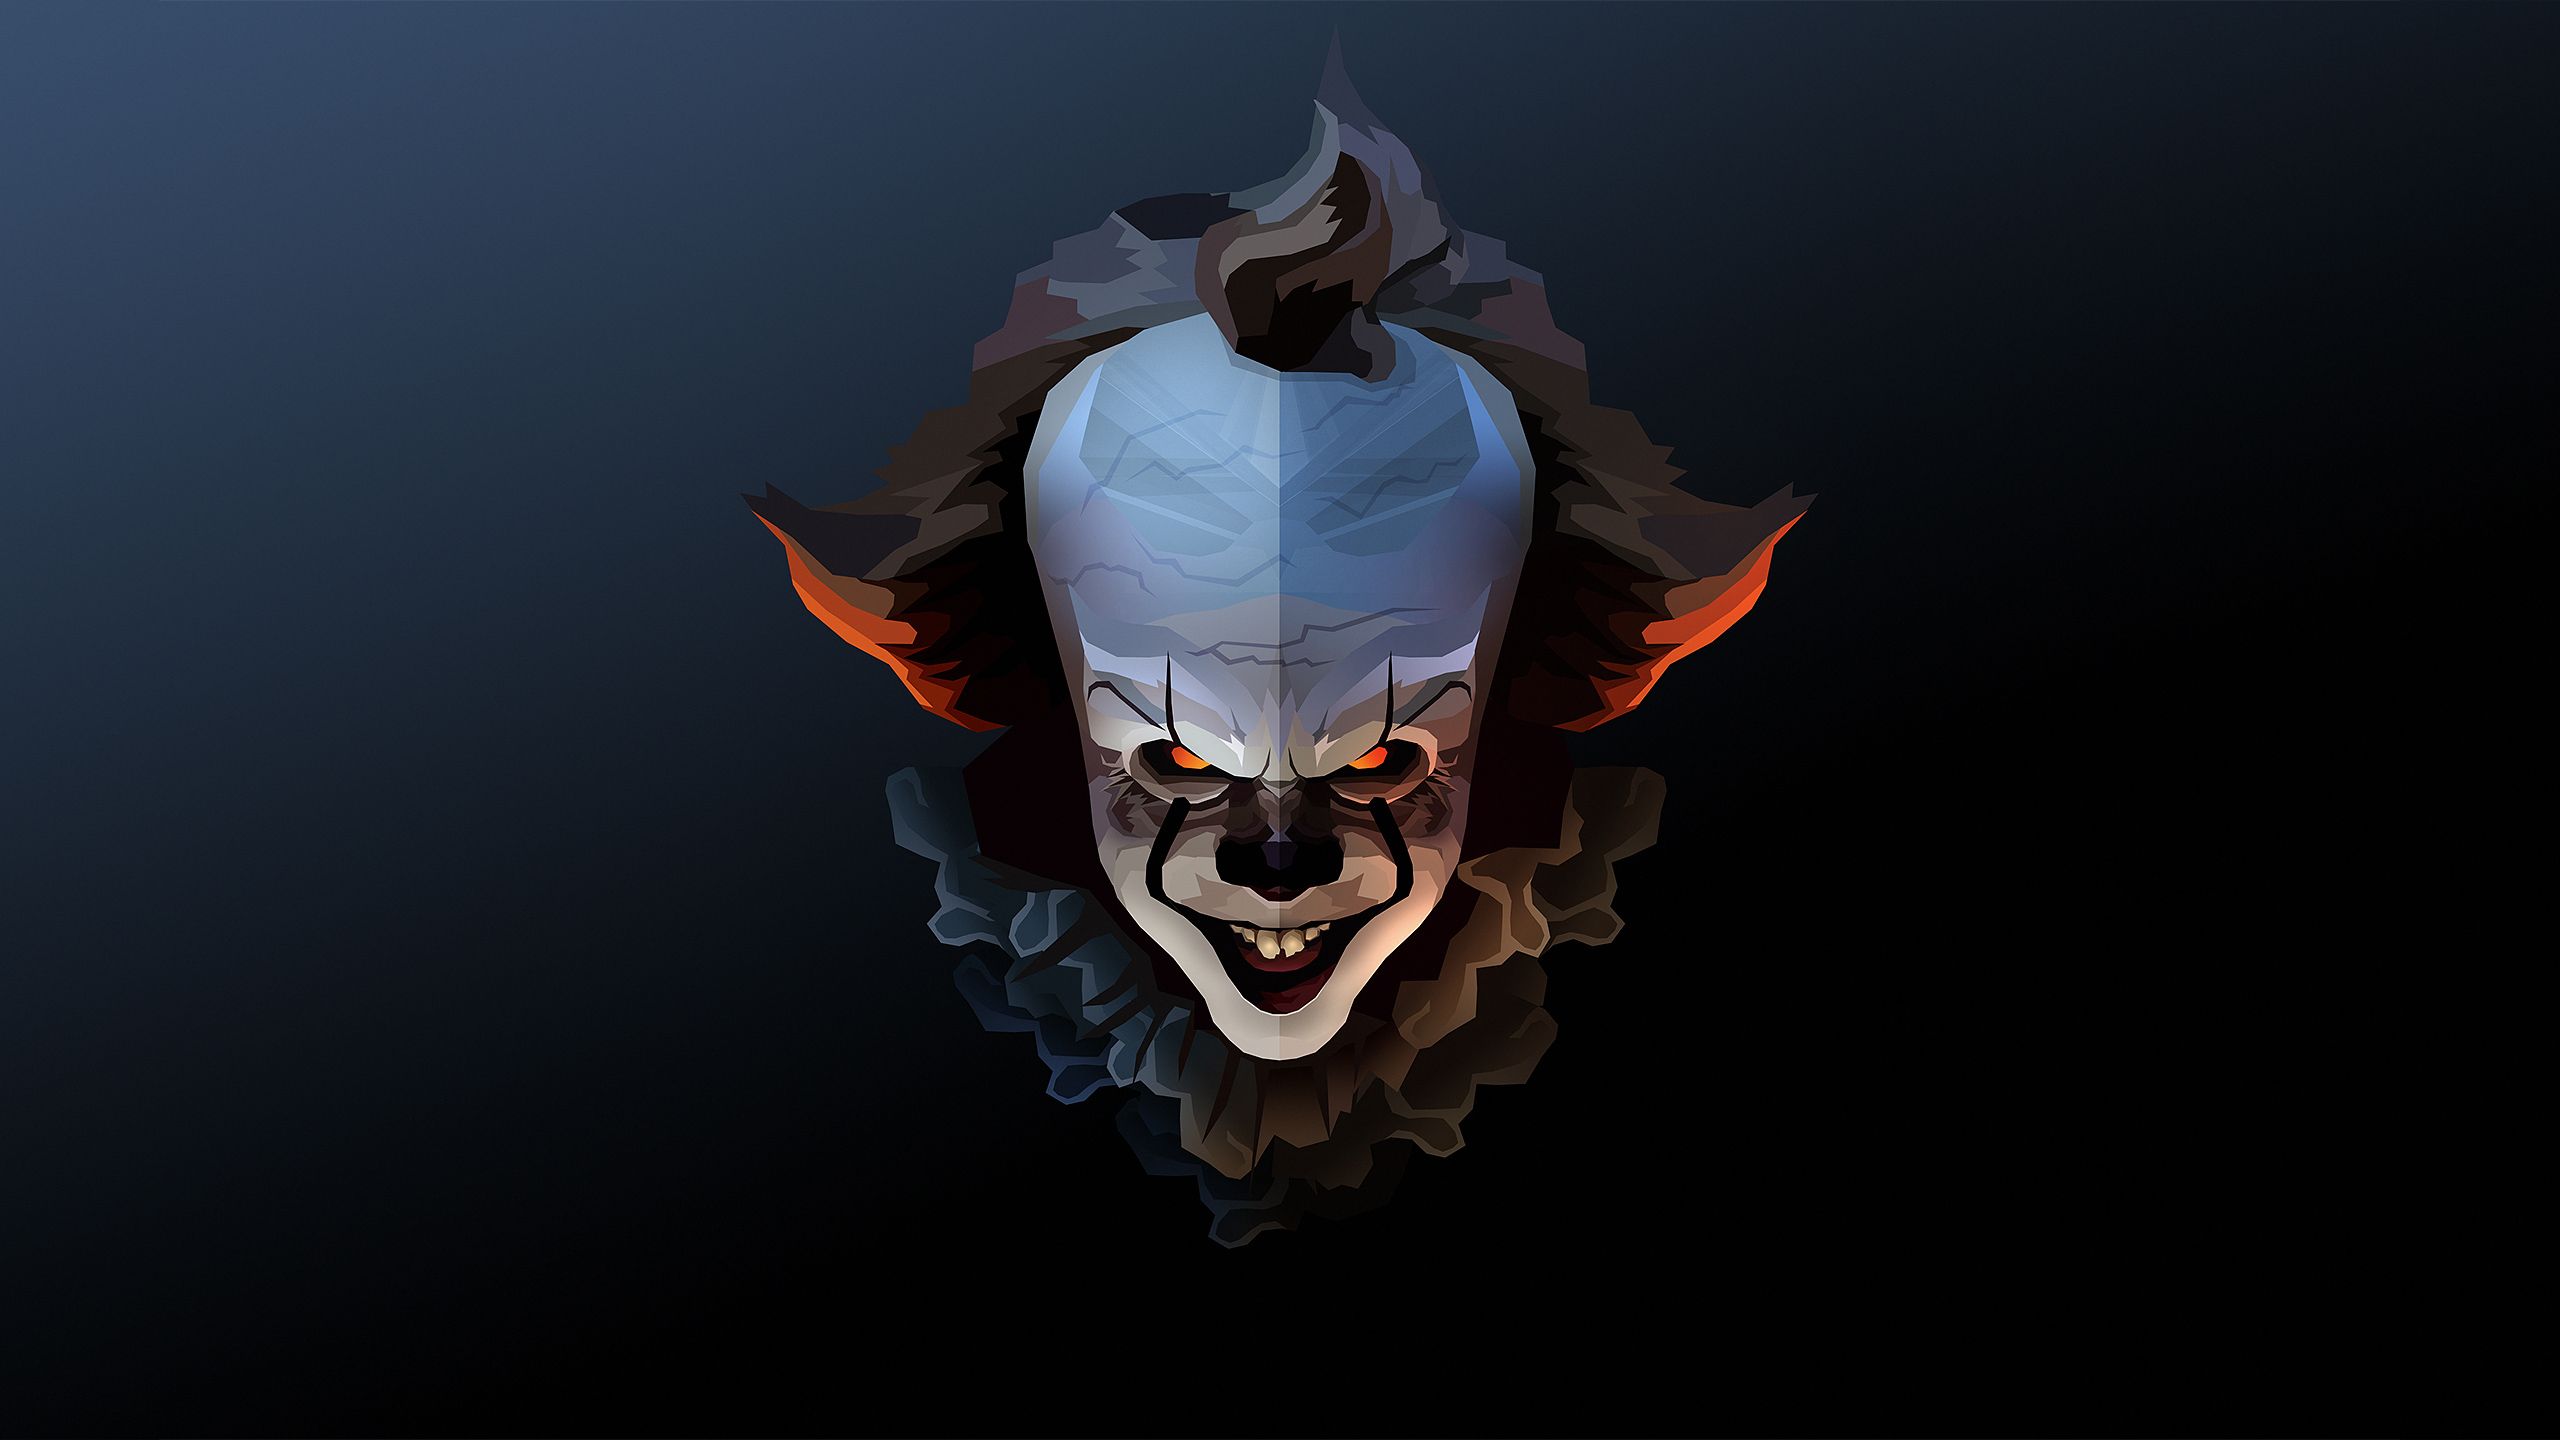 Pennywise The Clown Halloween Fanart, HD Artist, 4k Wallpapers, Image, Back...